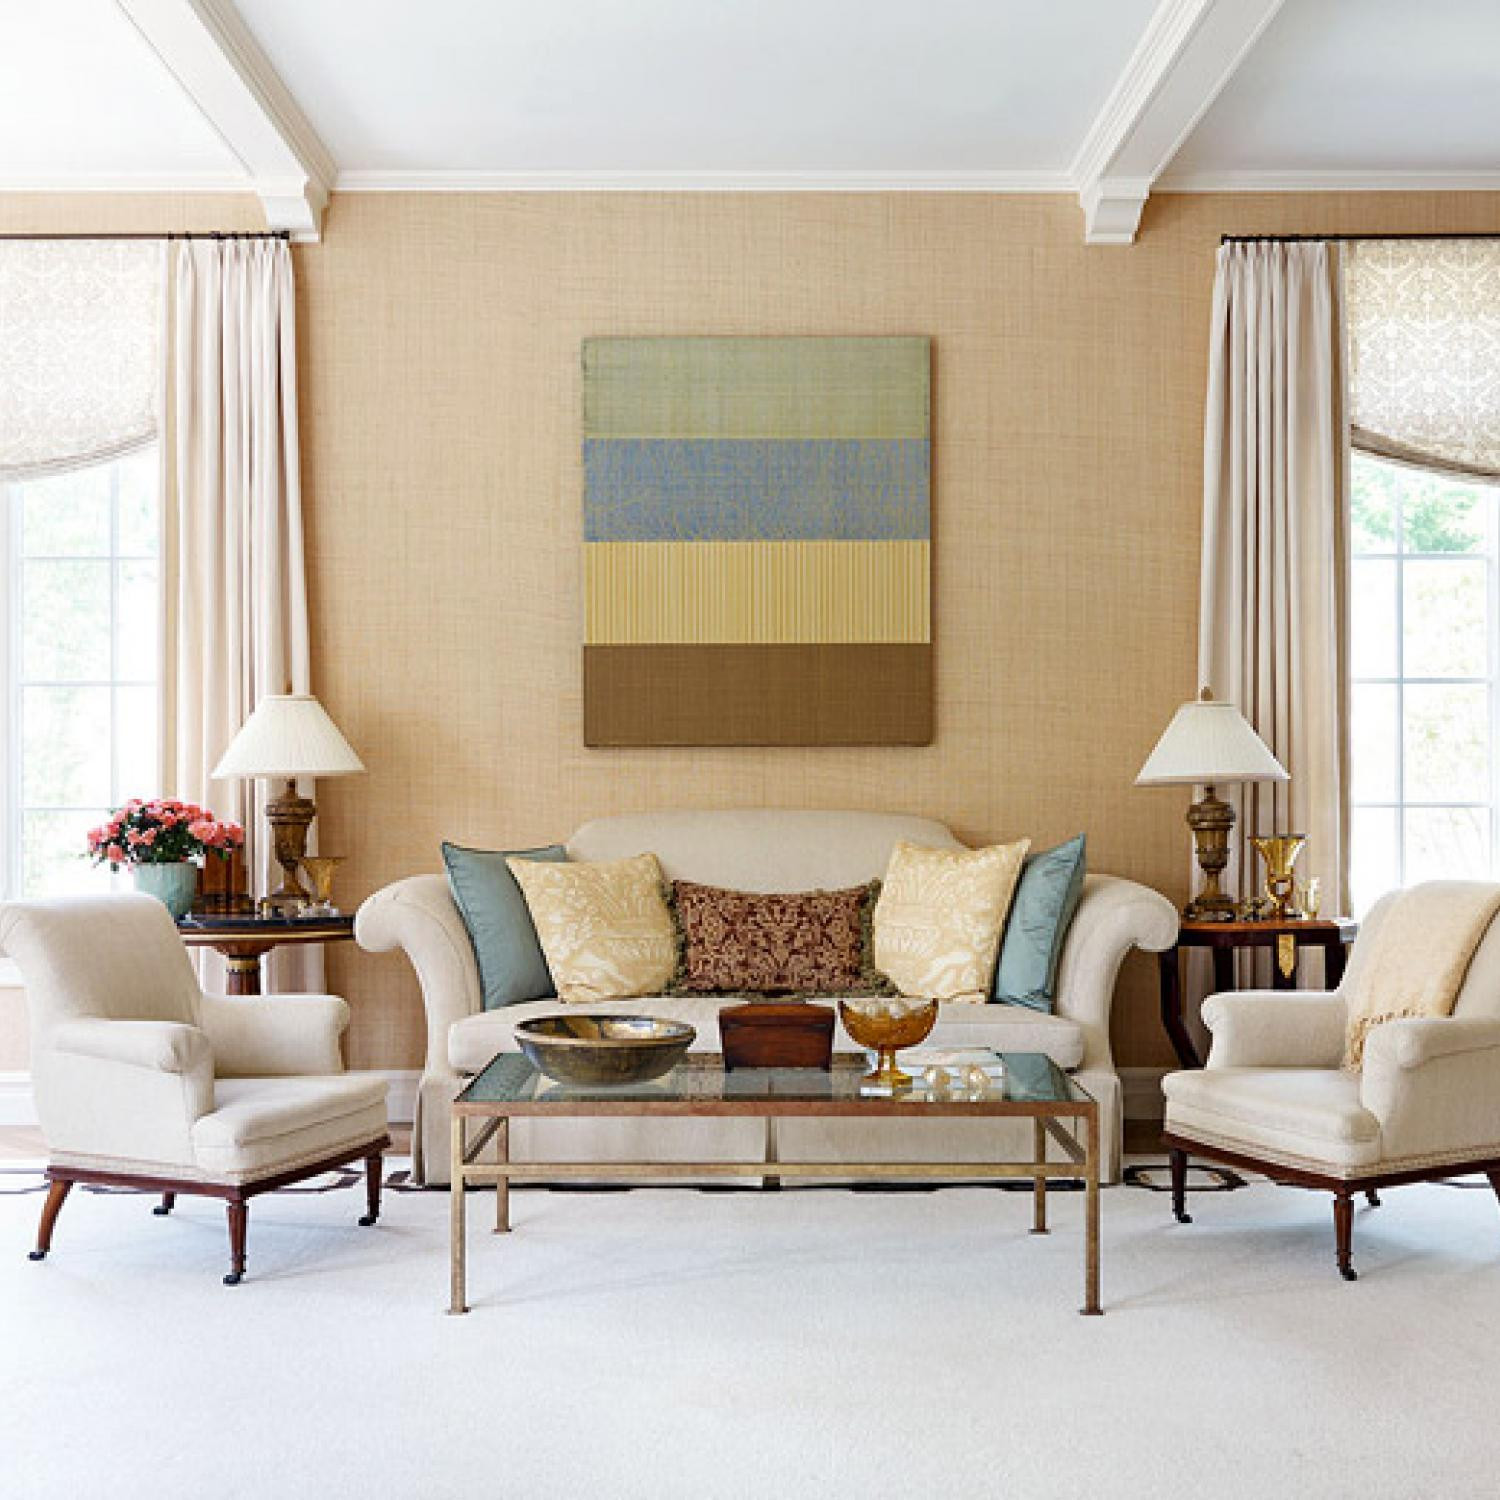 Classy Living Room Ideas
 Decorating Ideas Elegant Living Rooms